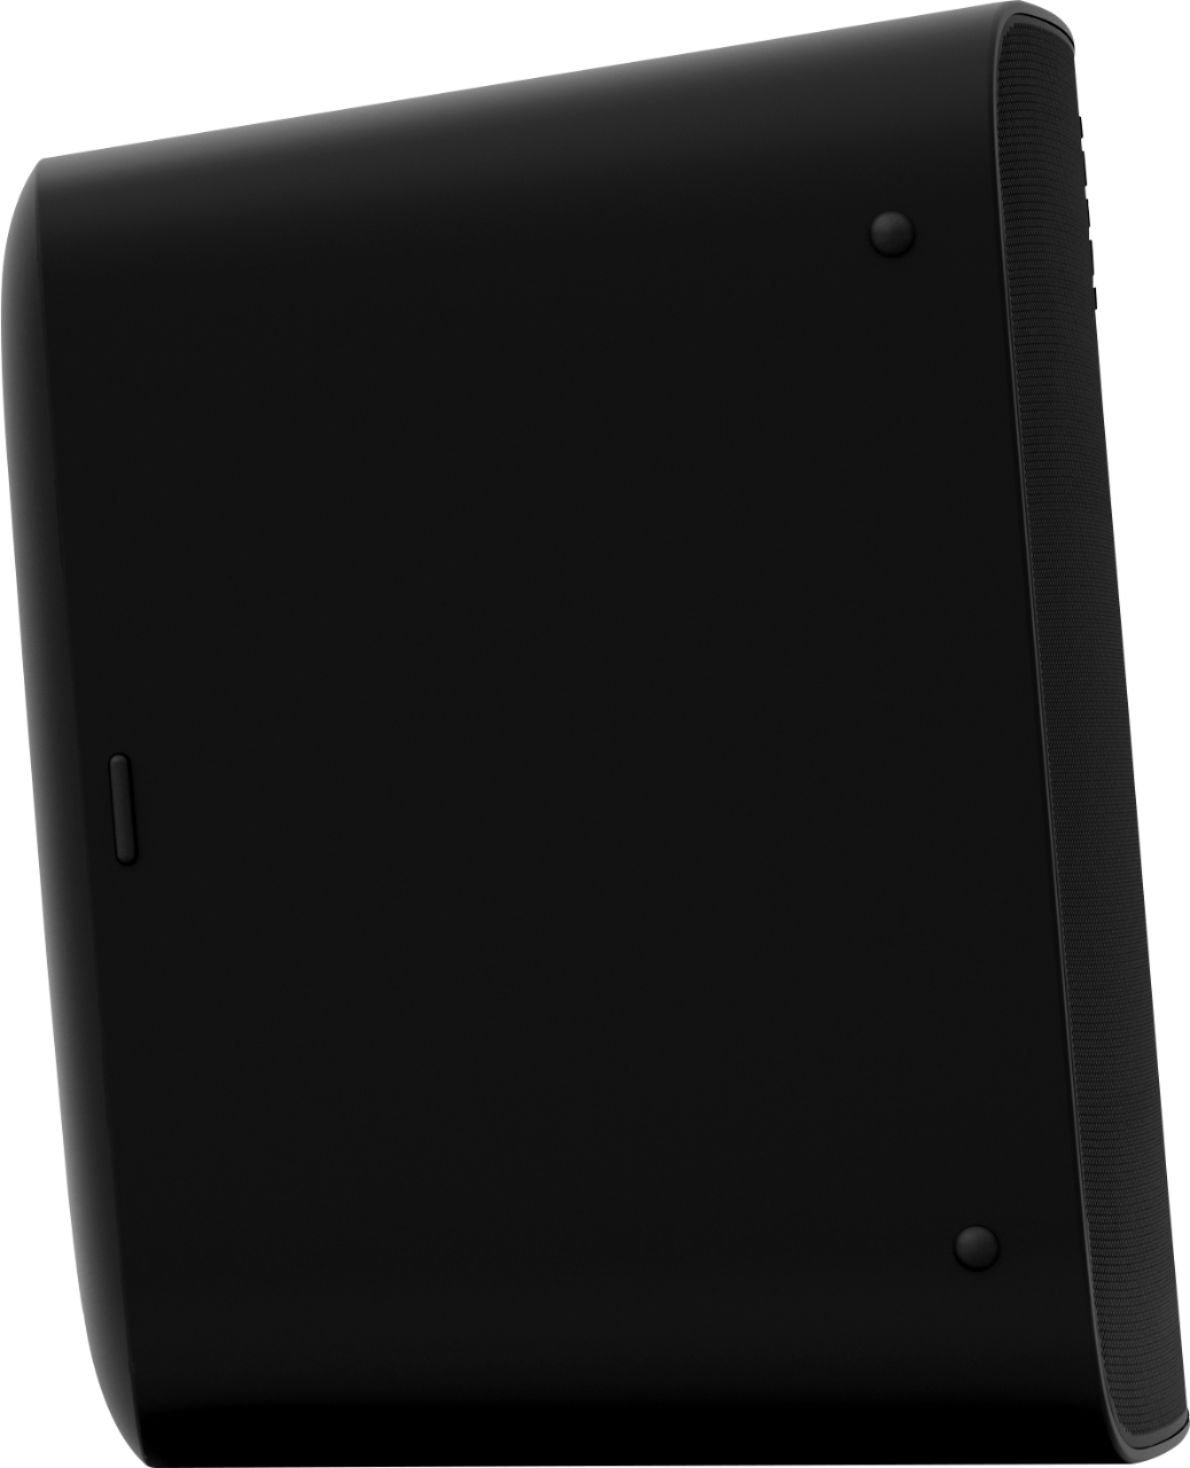 Sonos Geek Squad Certified Refurbished Five Wireless Speaker Black FIVE1US1BLK -